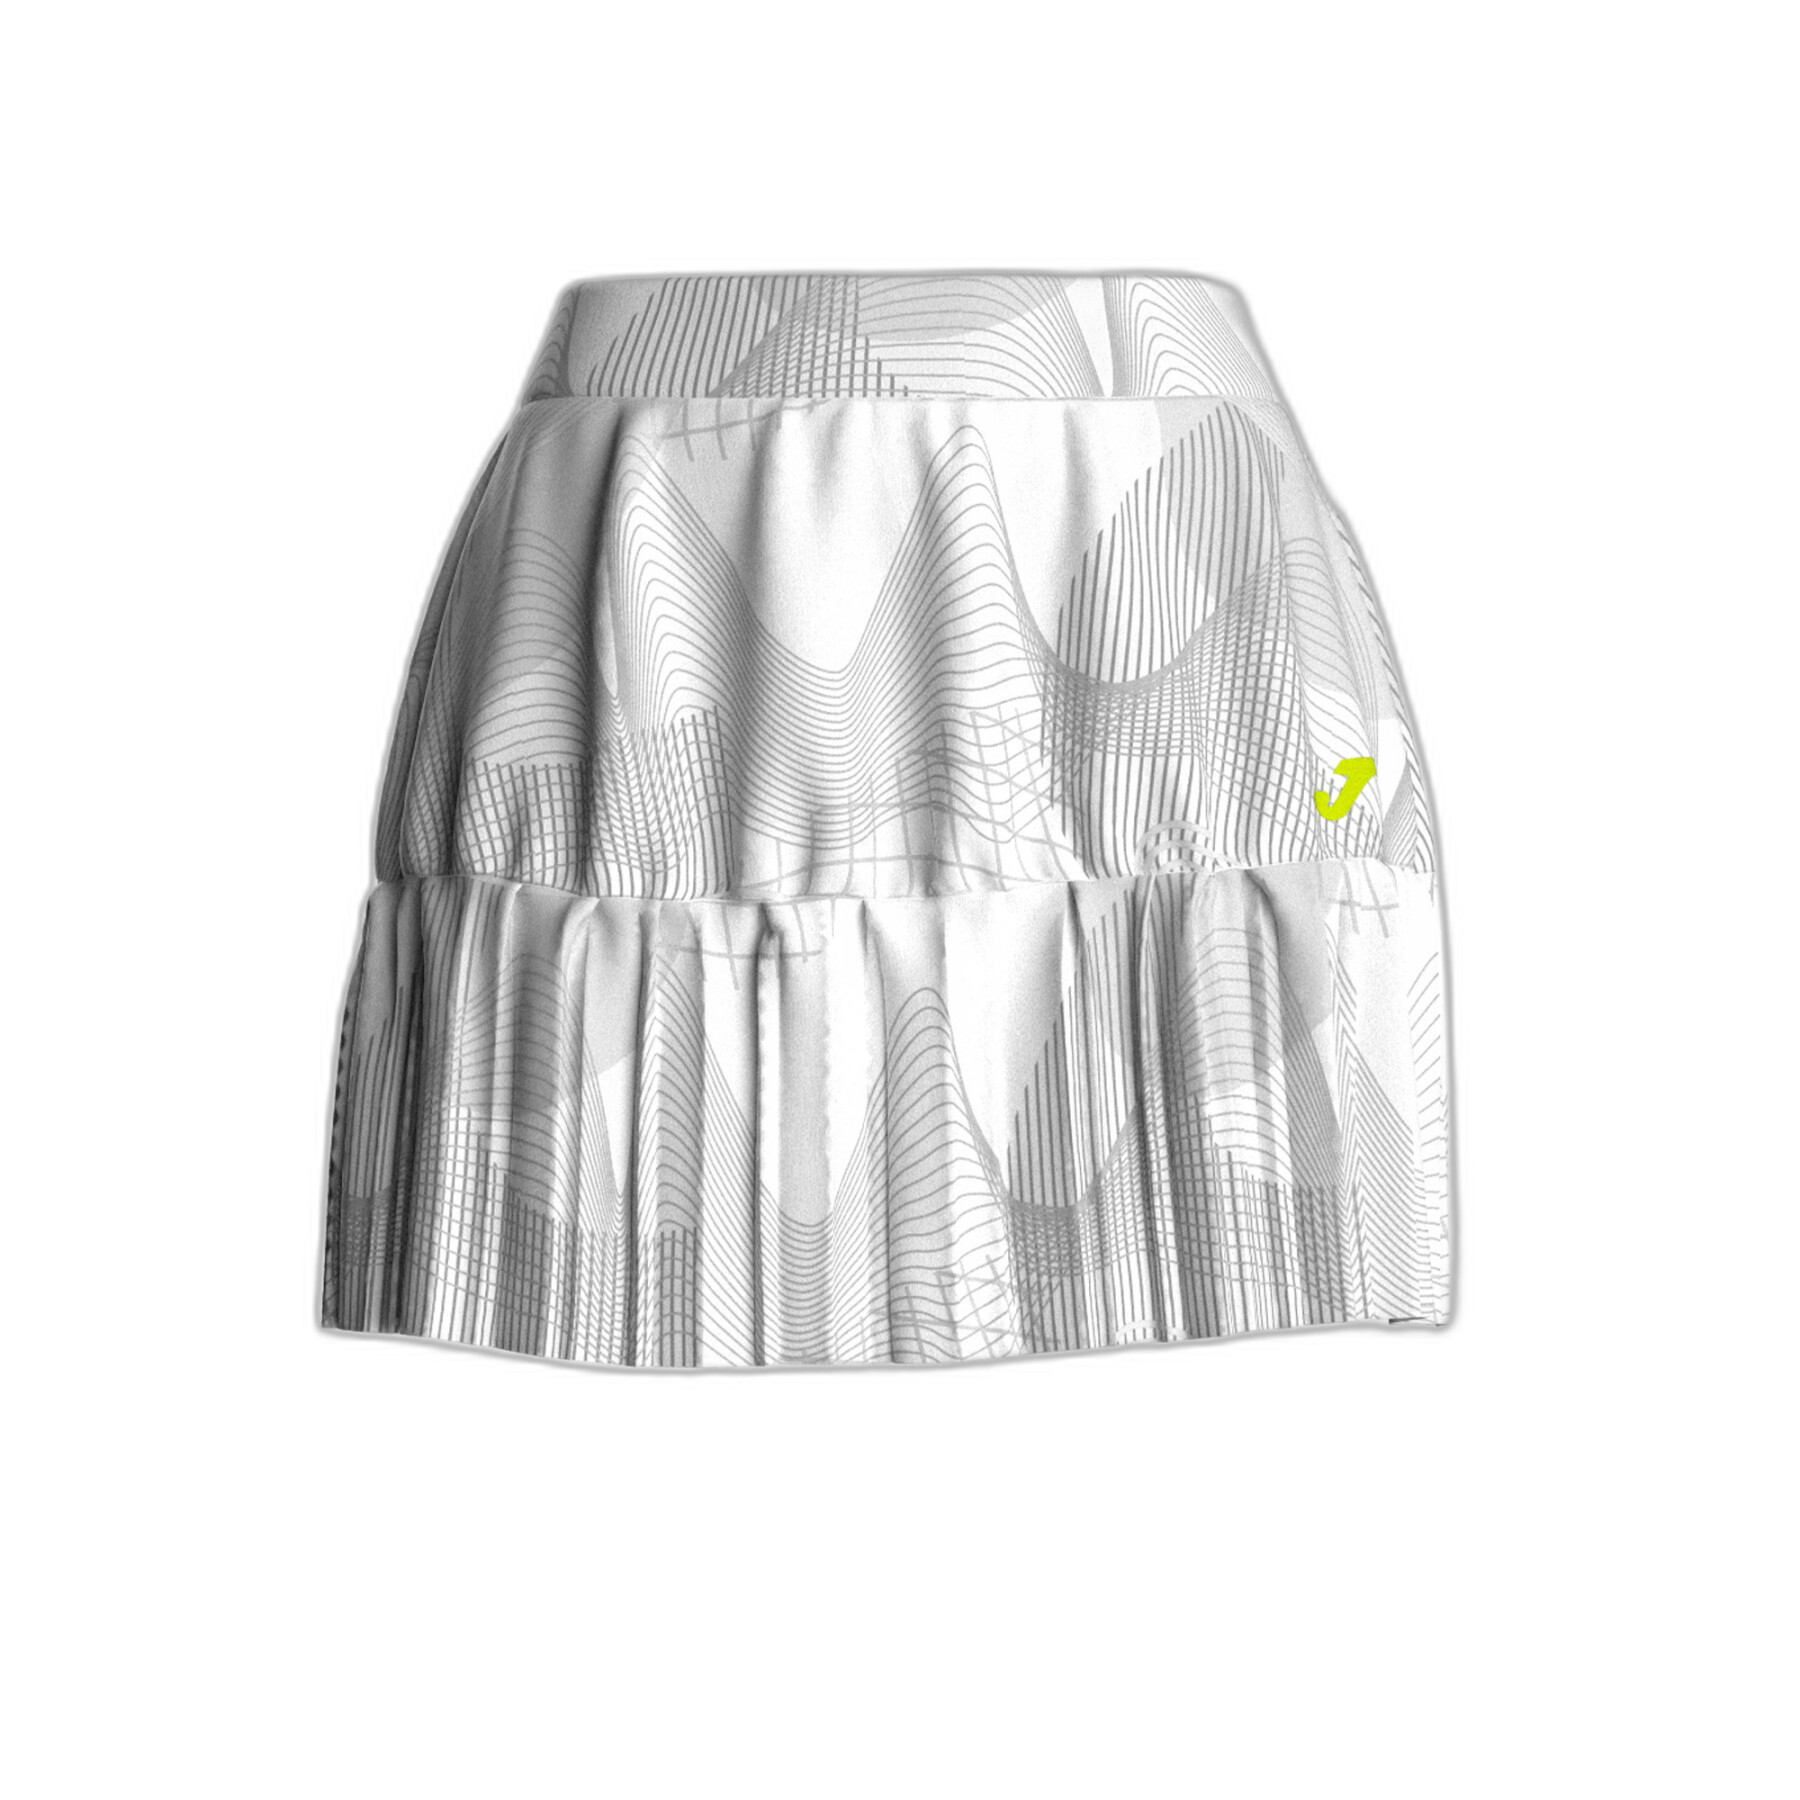 Women's skirt-short Joma Challenge